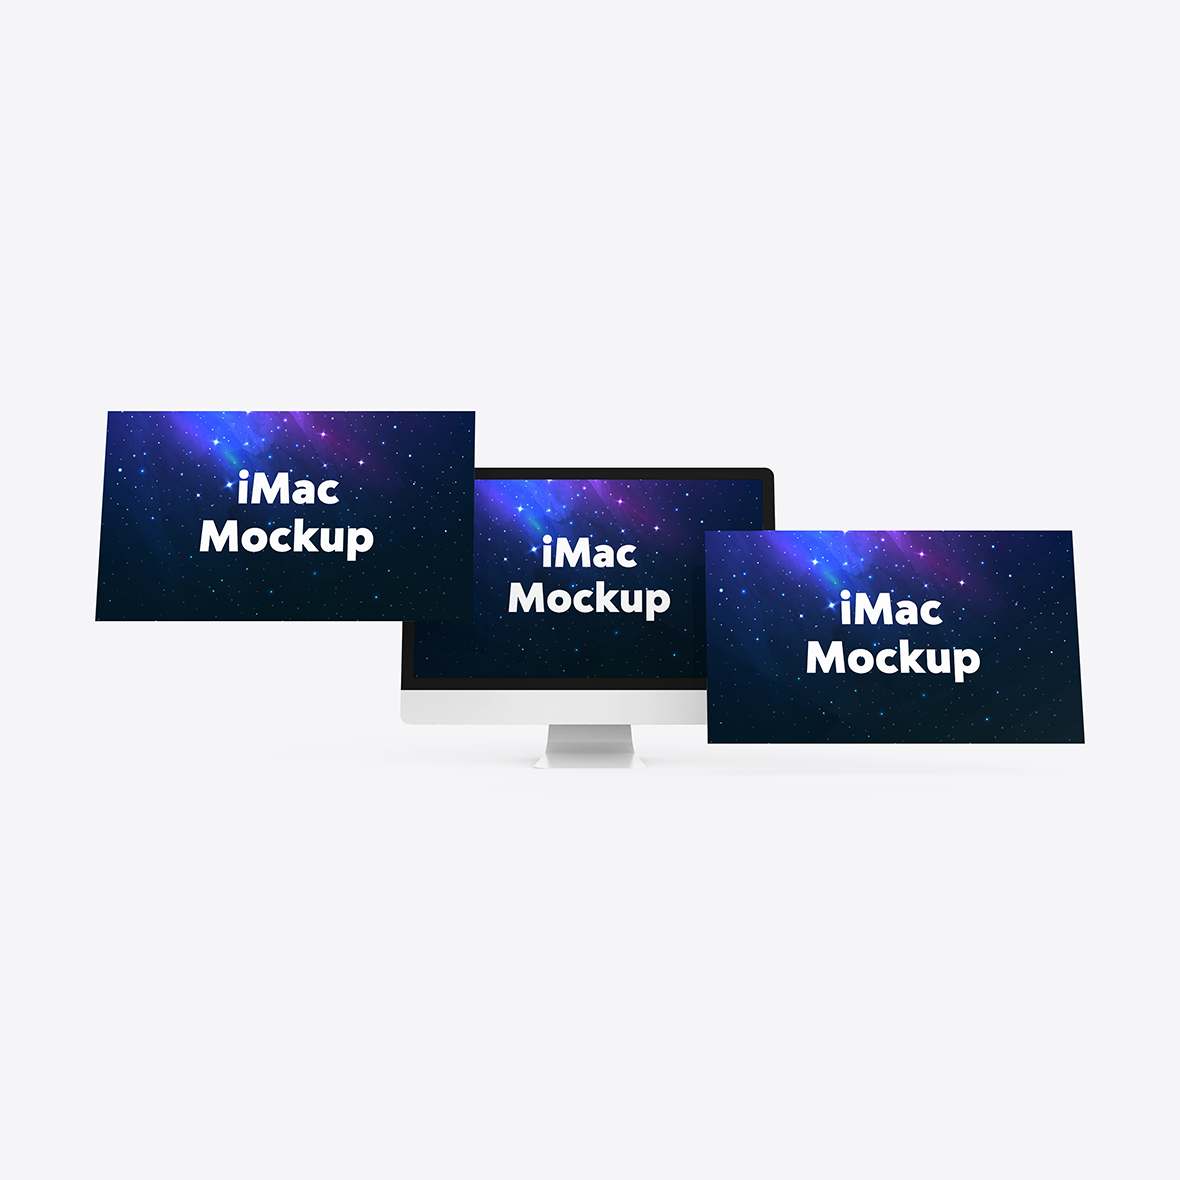 iMac Mockup